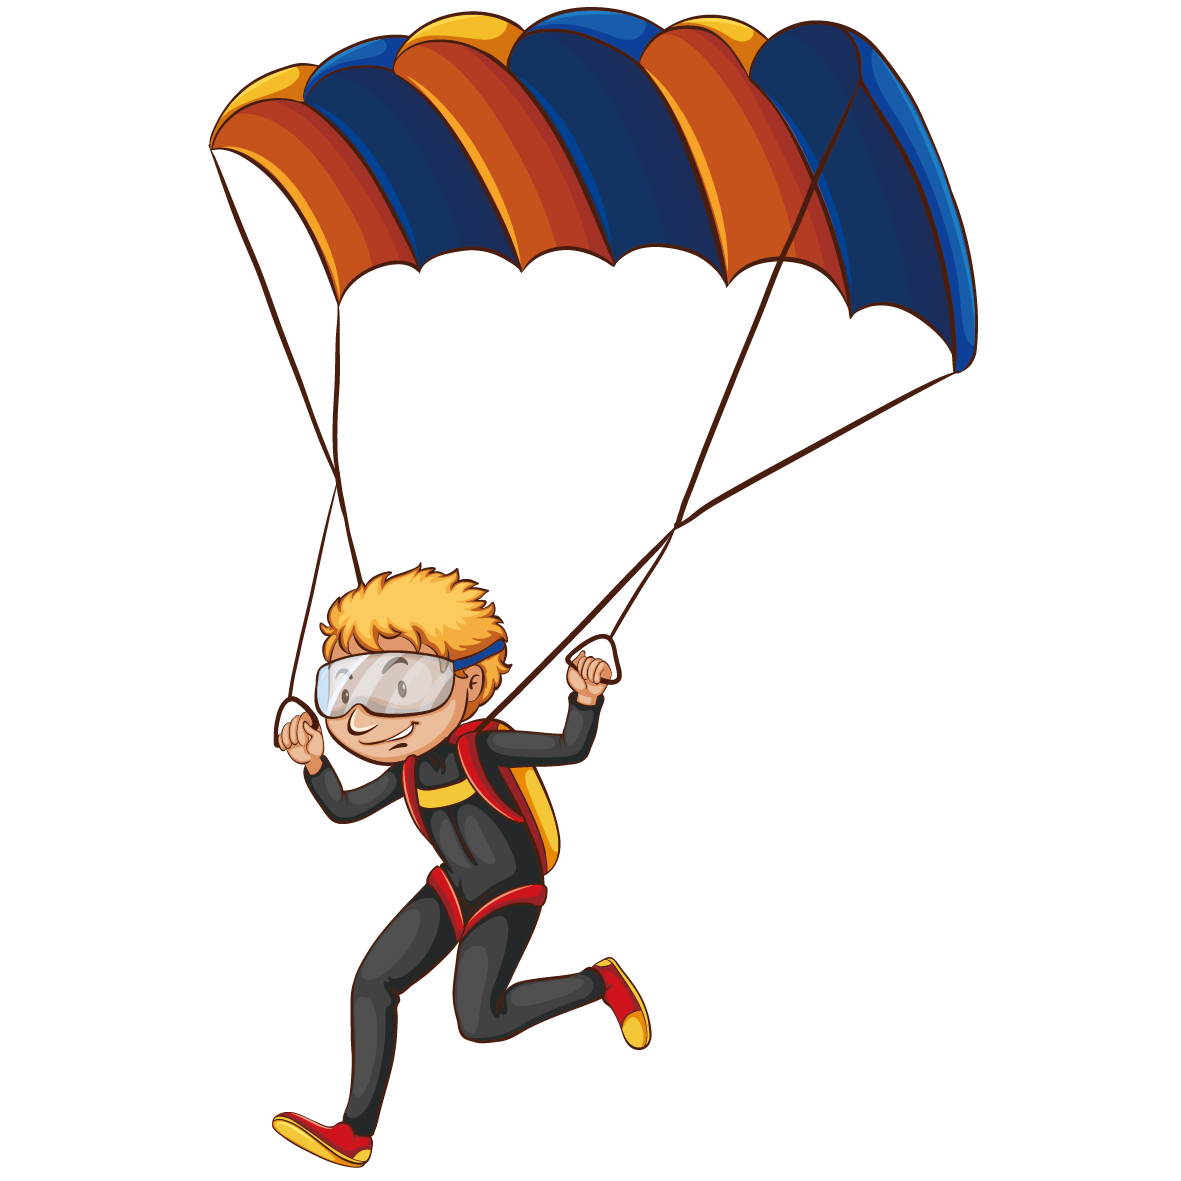 Parachute Parachuting Cartoon Royalty Free Parachute Material Png